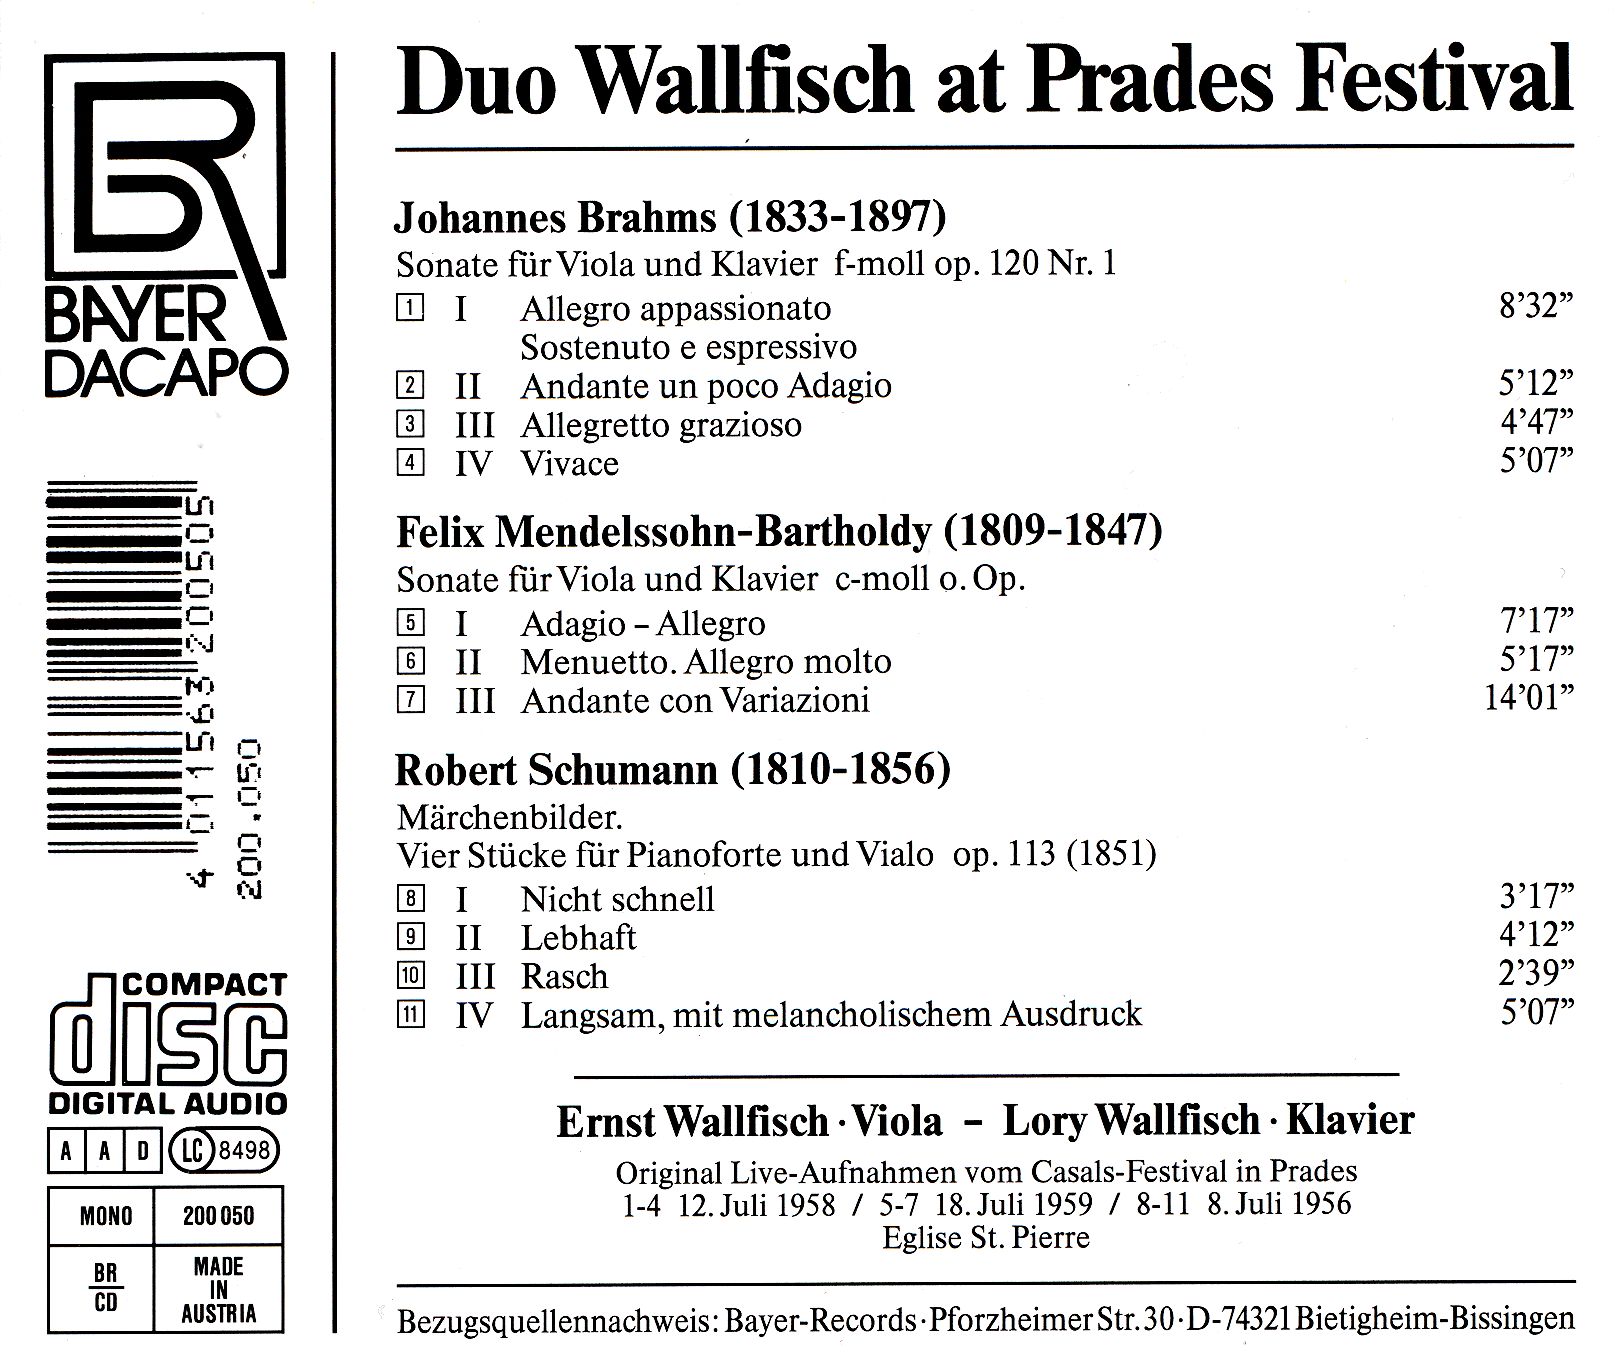 Duo Wallfisch at Prades Festival